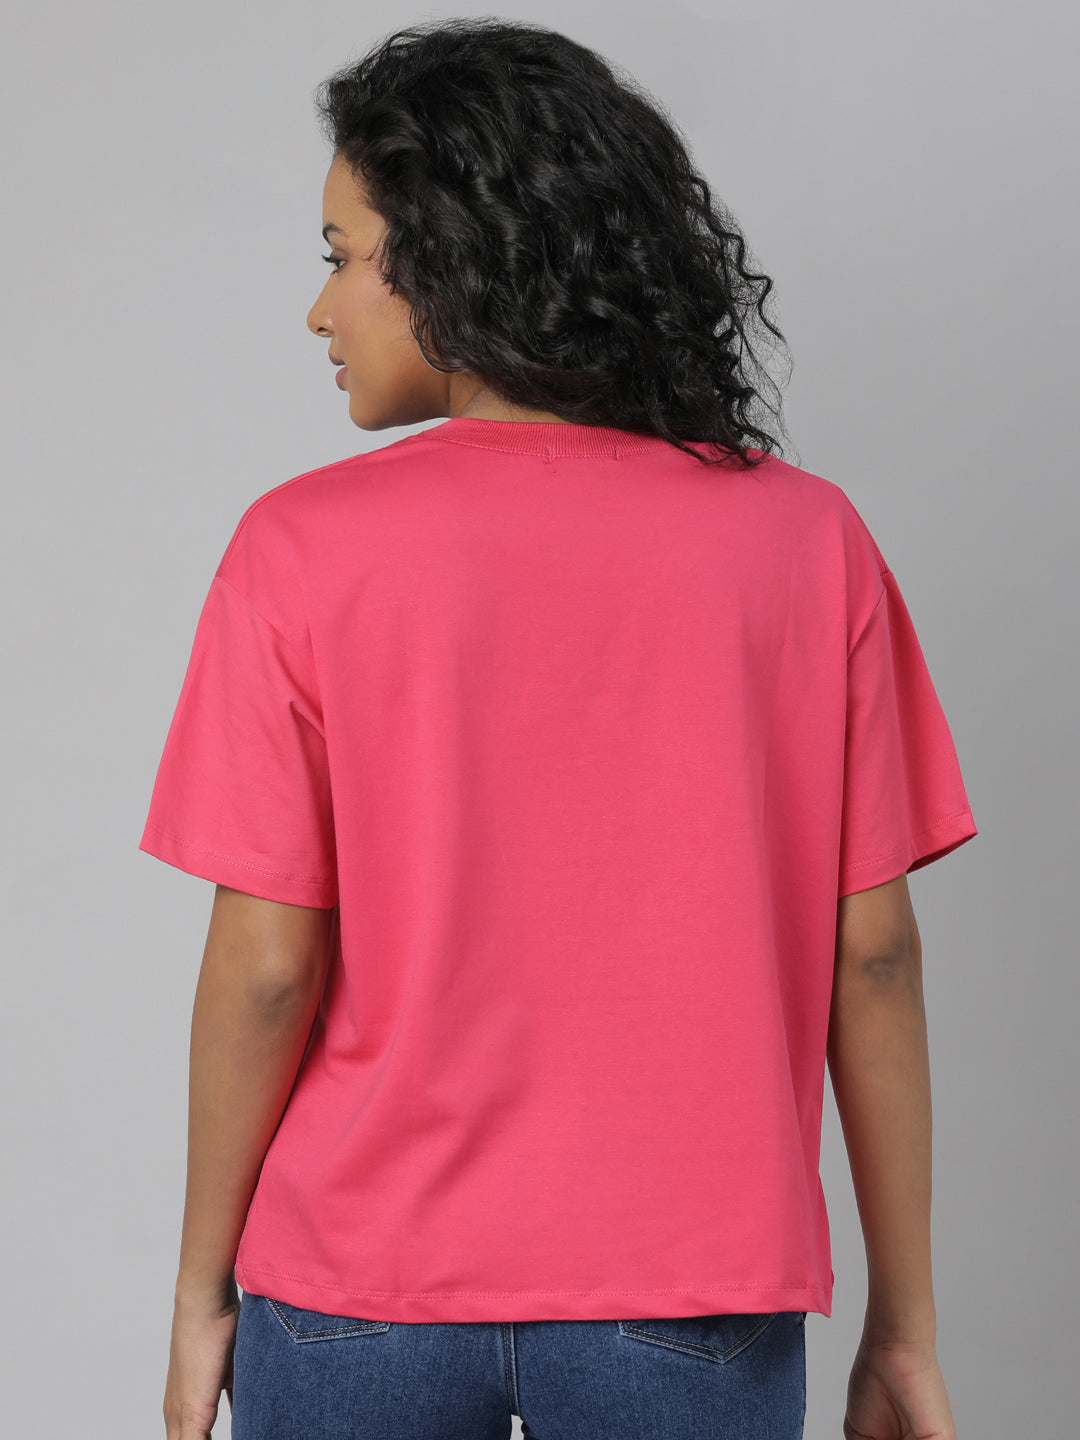 Women Solid Pink T Shirt